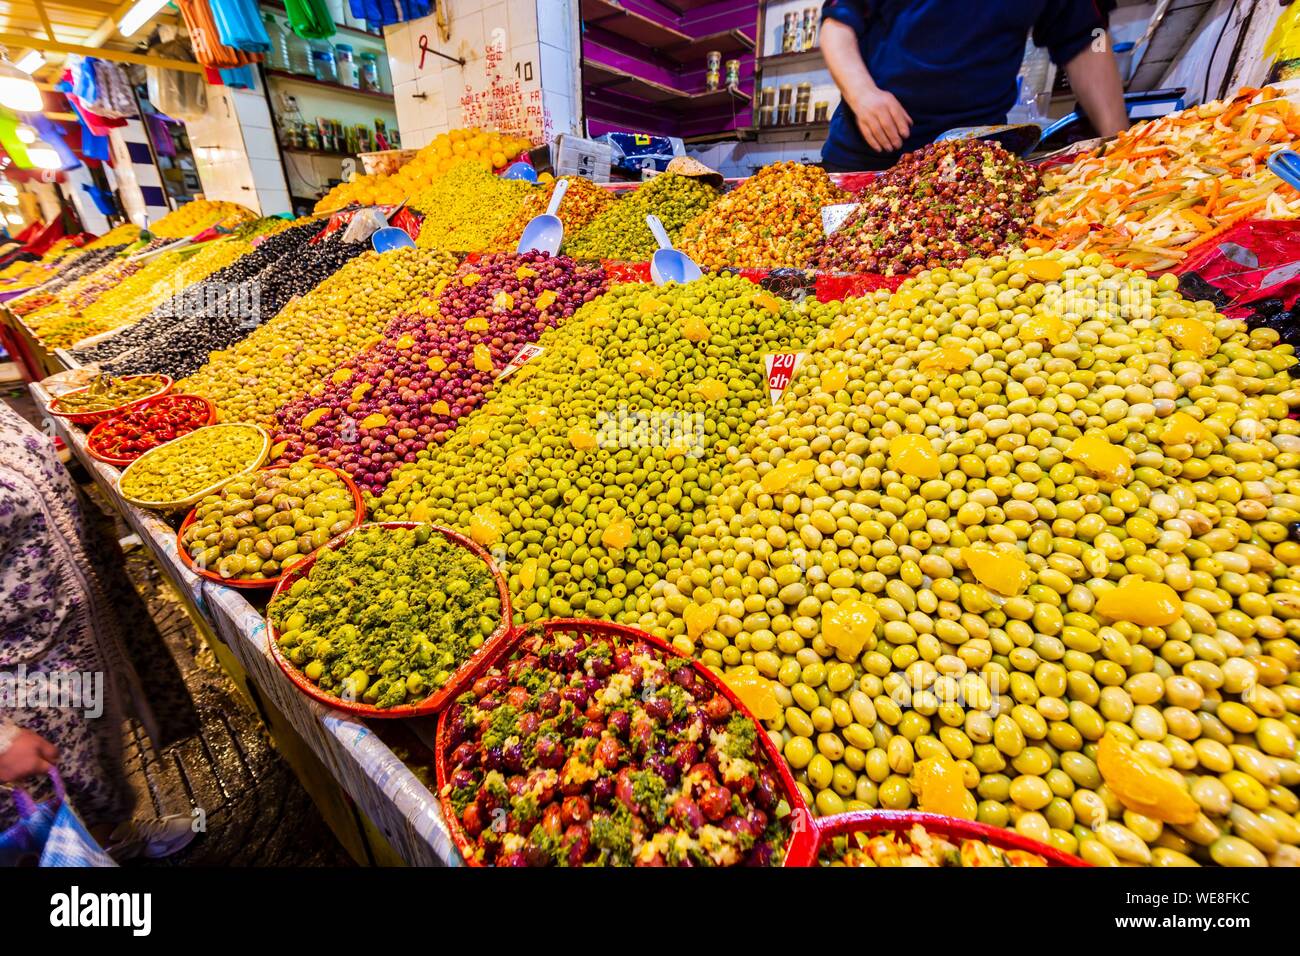 Morocco, Casablanca, Habous district, courette-market with olives Stock Photo